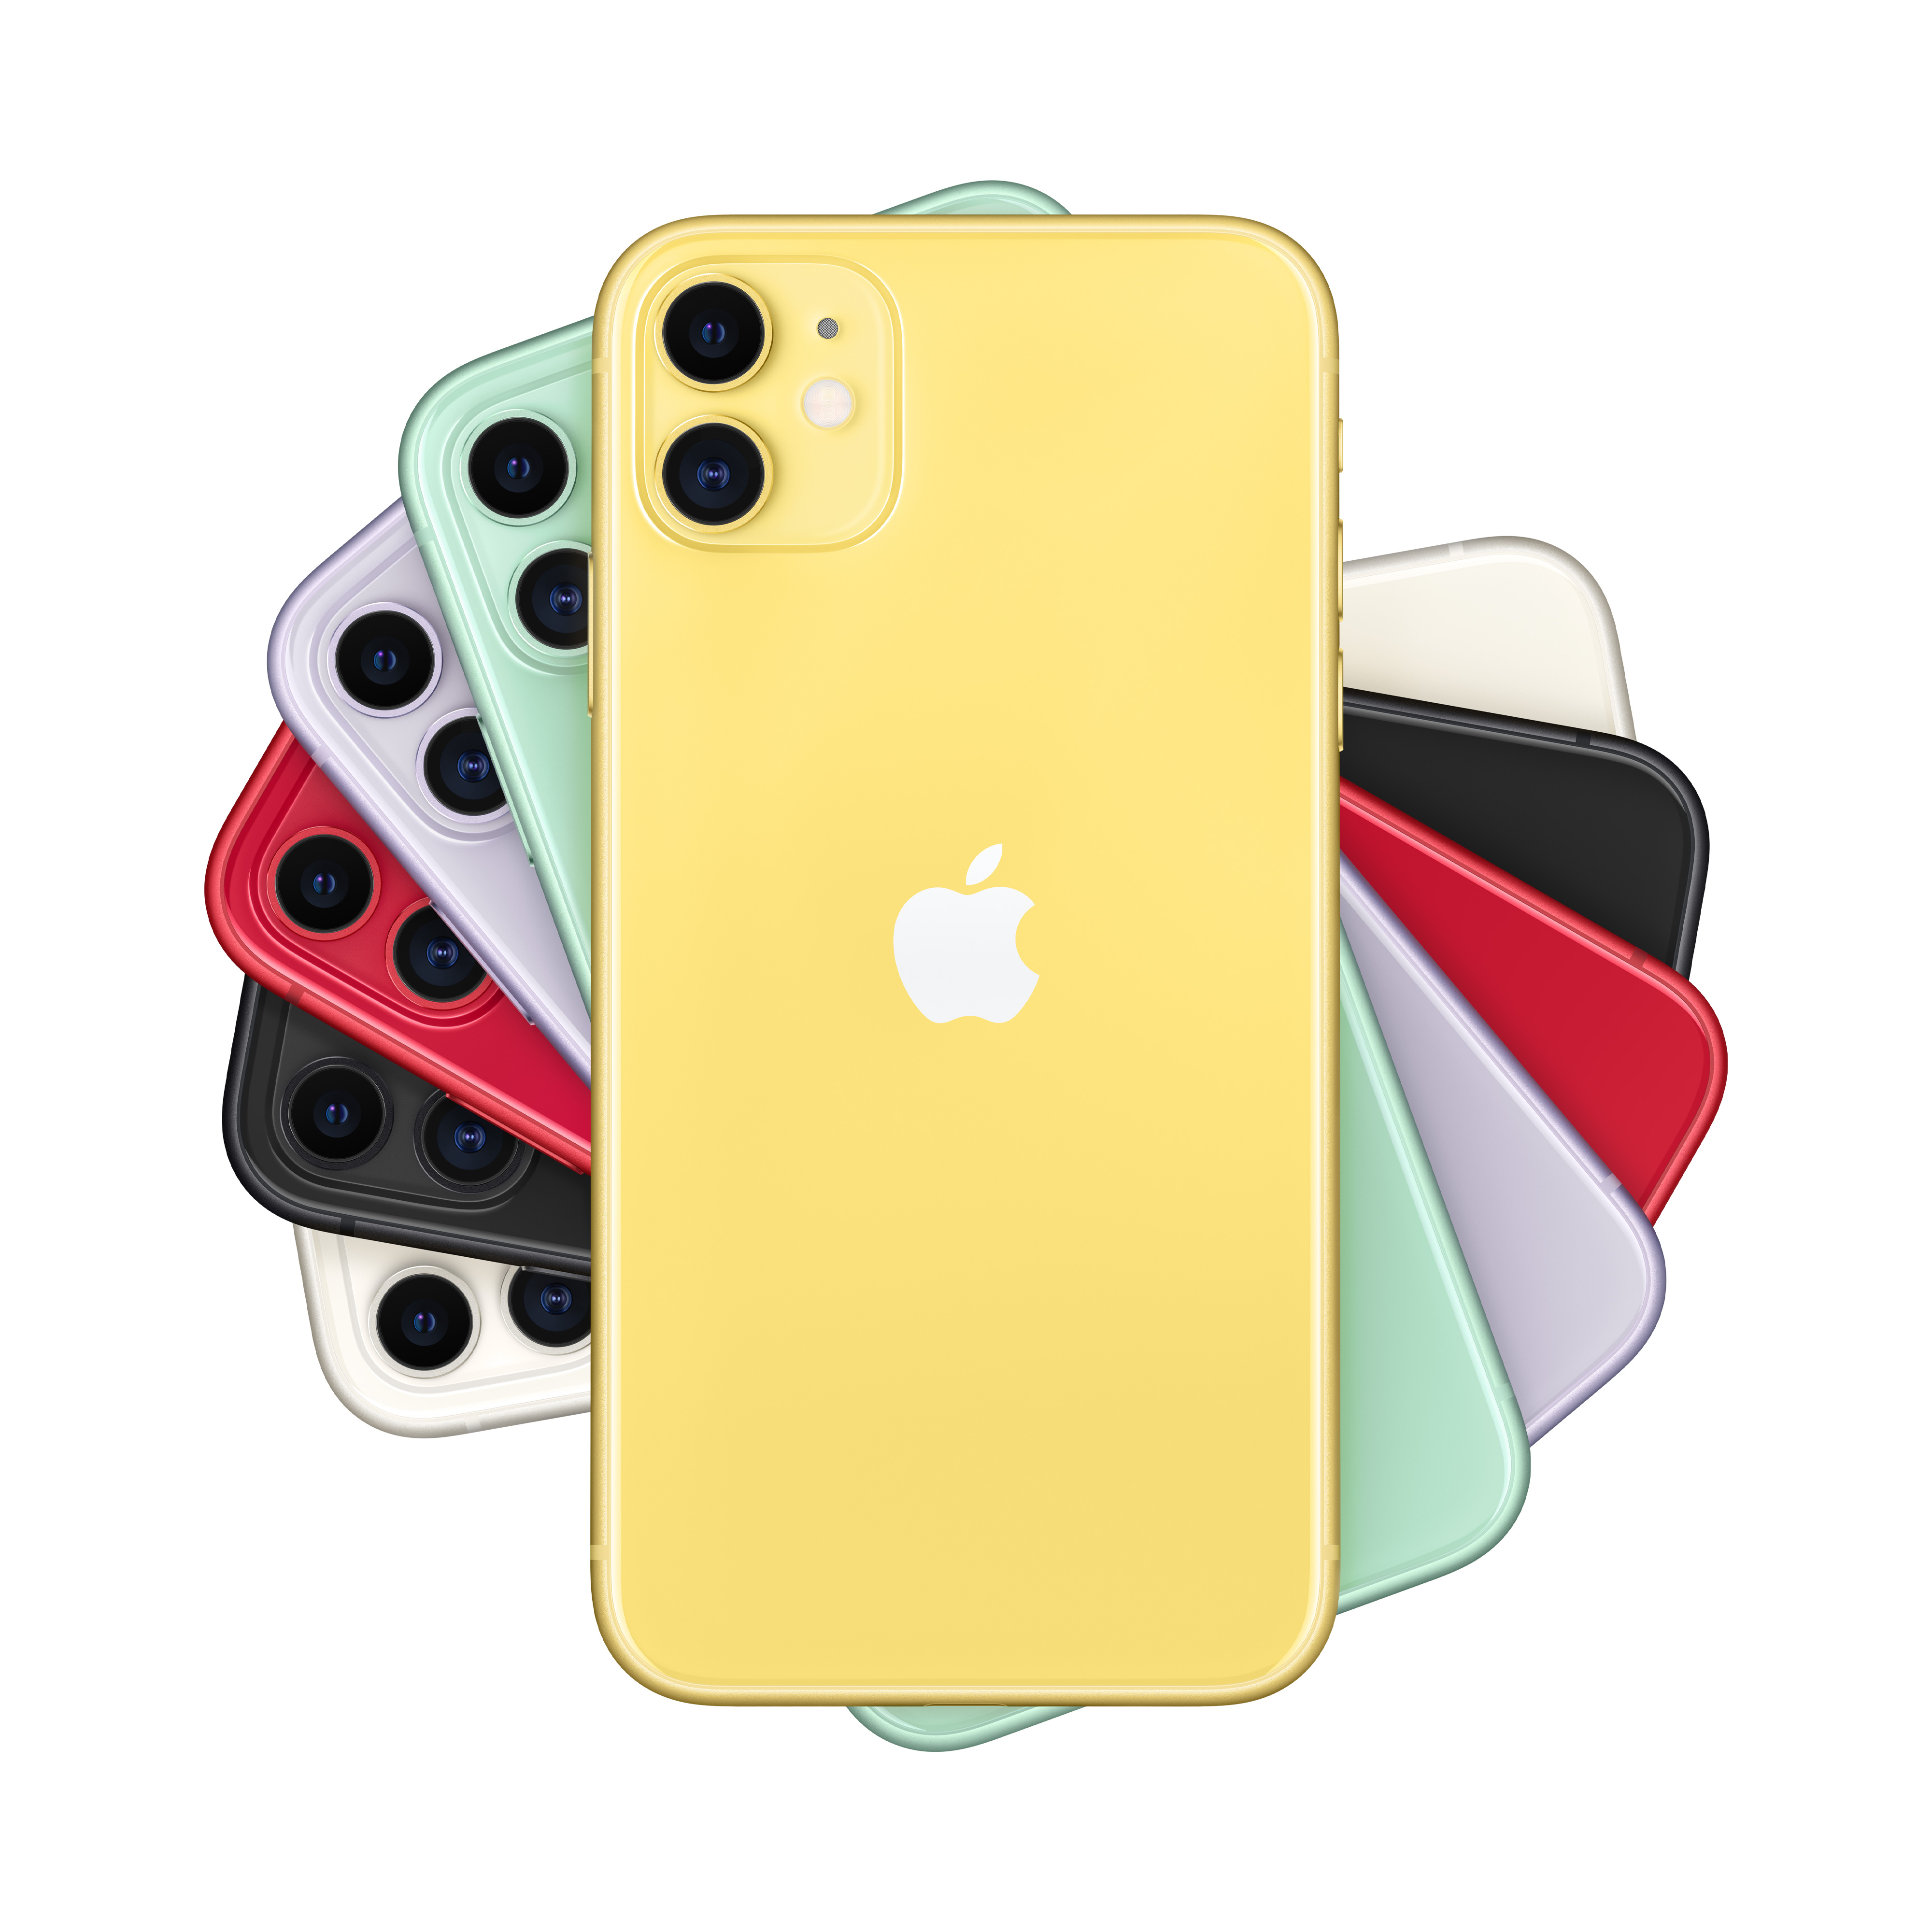 Фото — Apple iPhone 11, 256 ГБ, желтый, новая коплектация